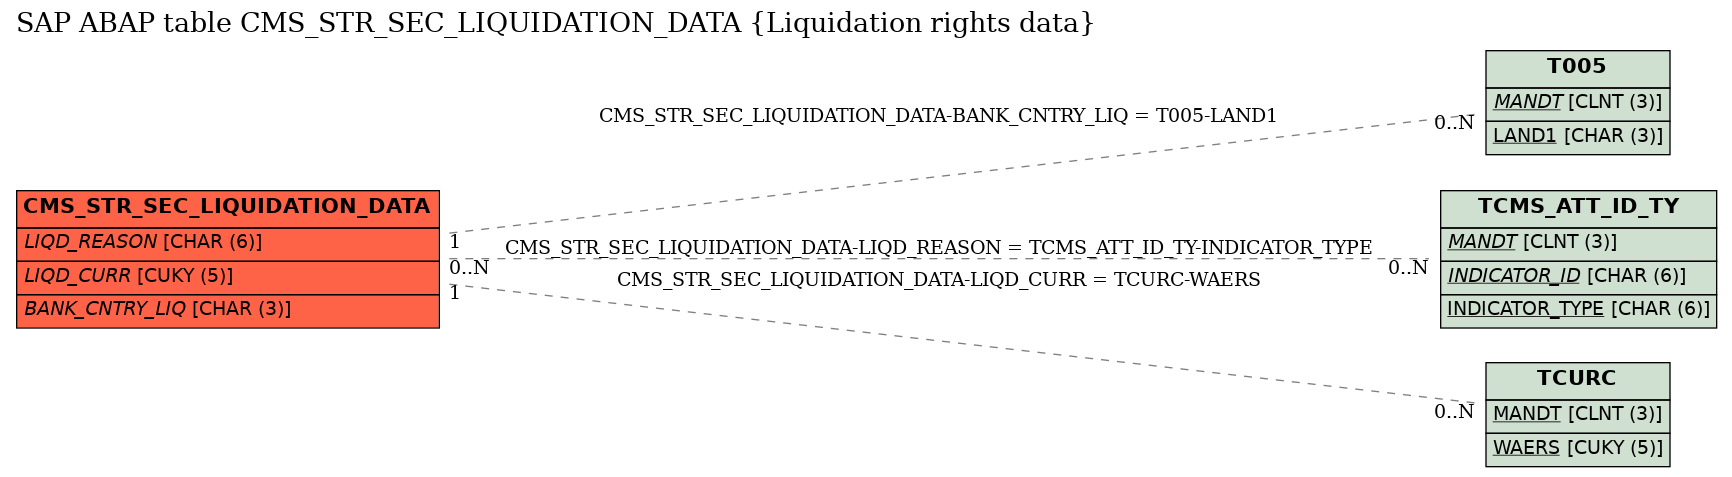 E-R Diagram for table CMS_STR_SEC_LIQUIDATION_DATA (Liquidation rights data)